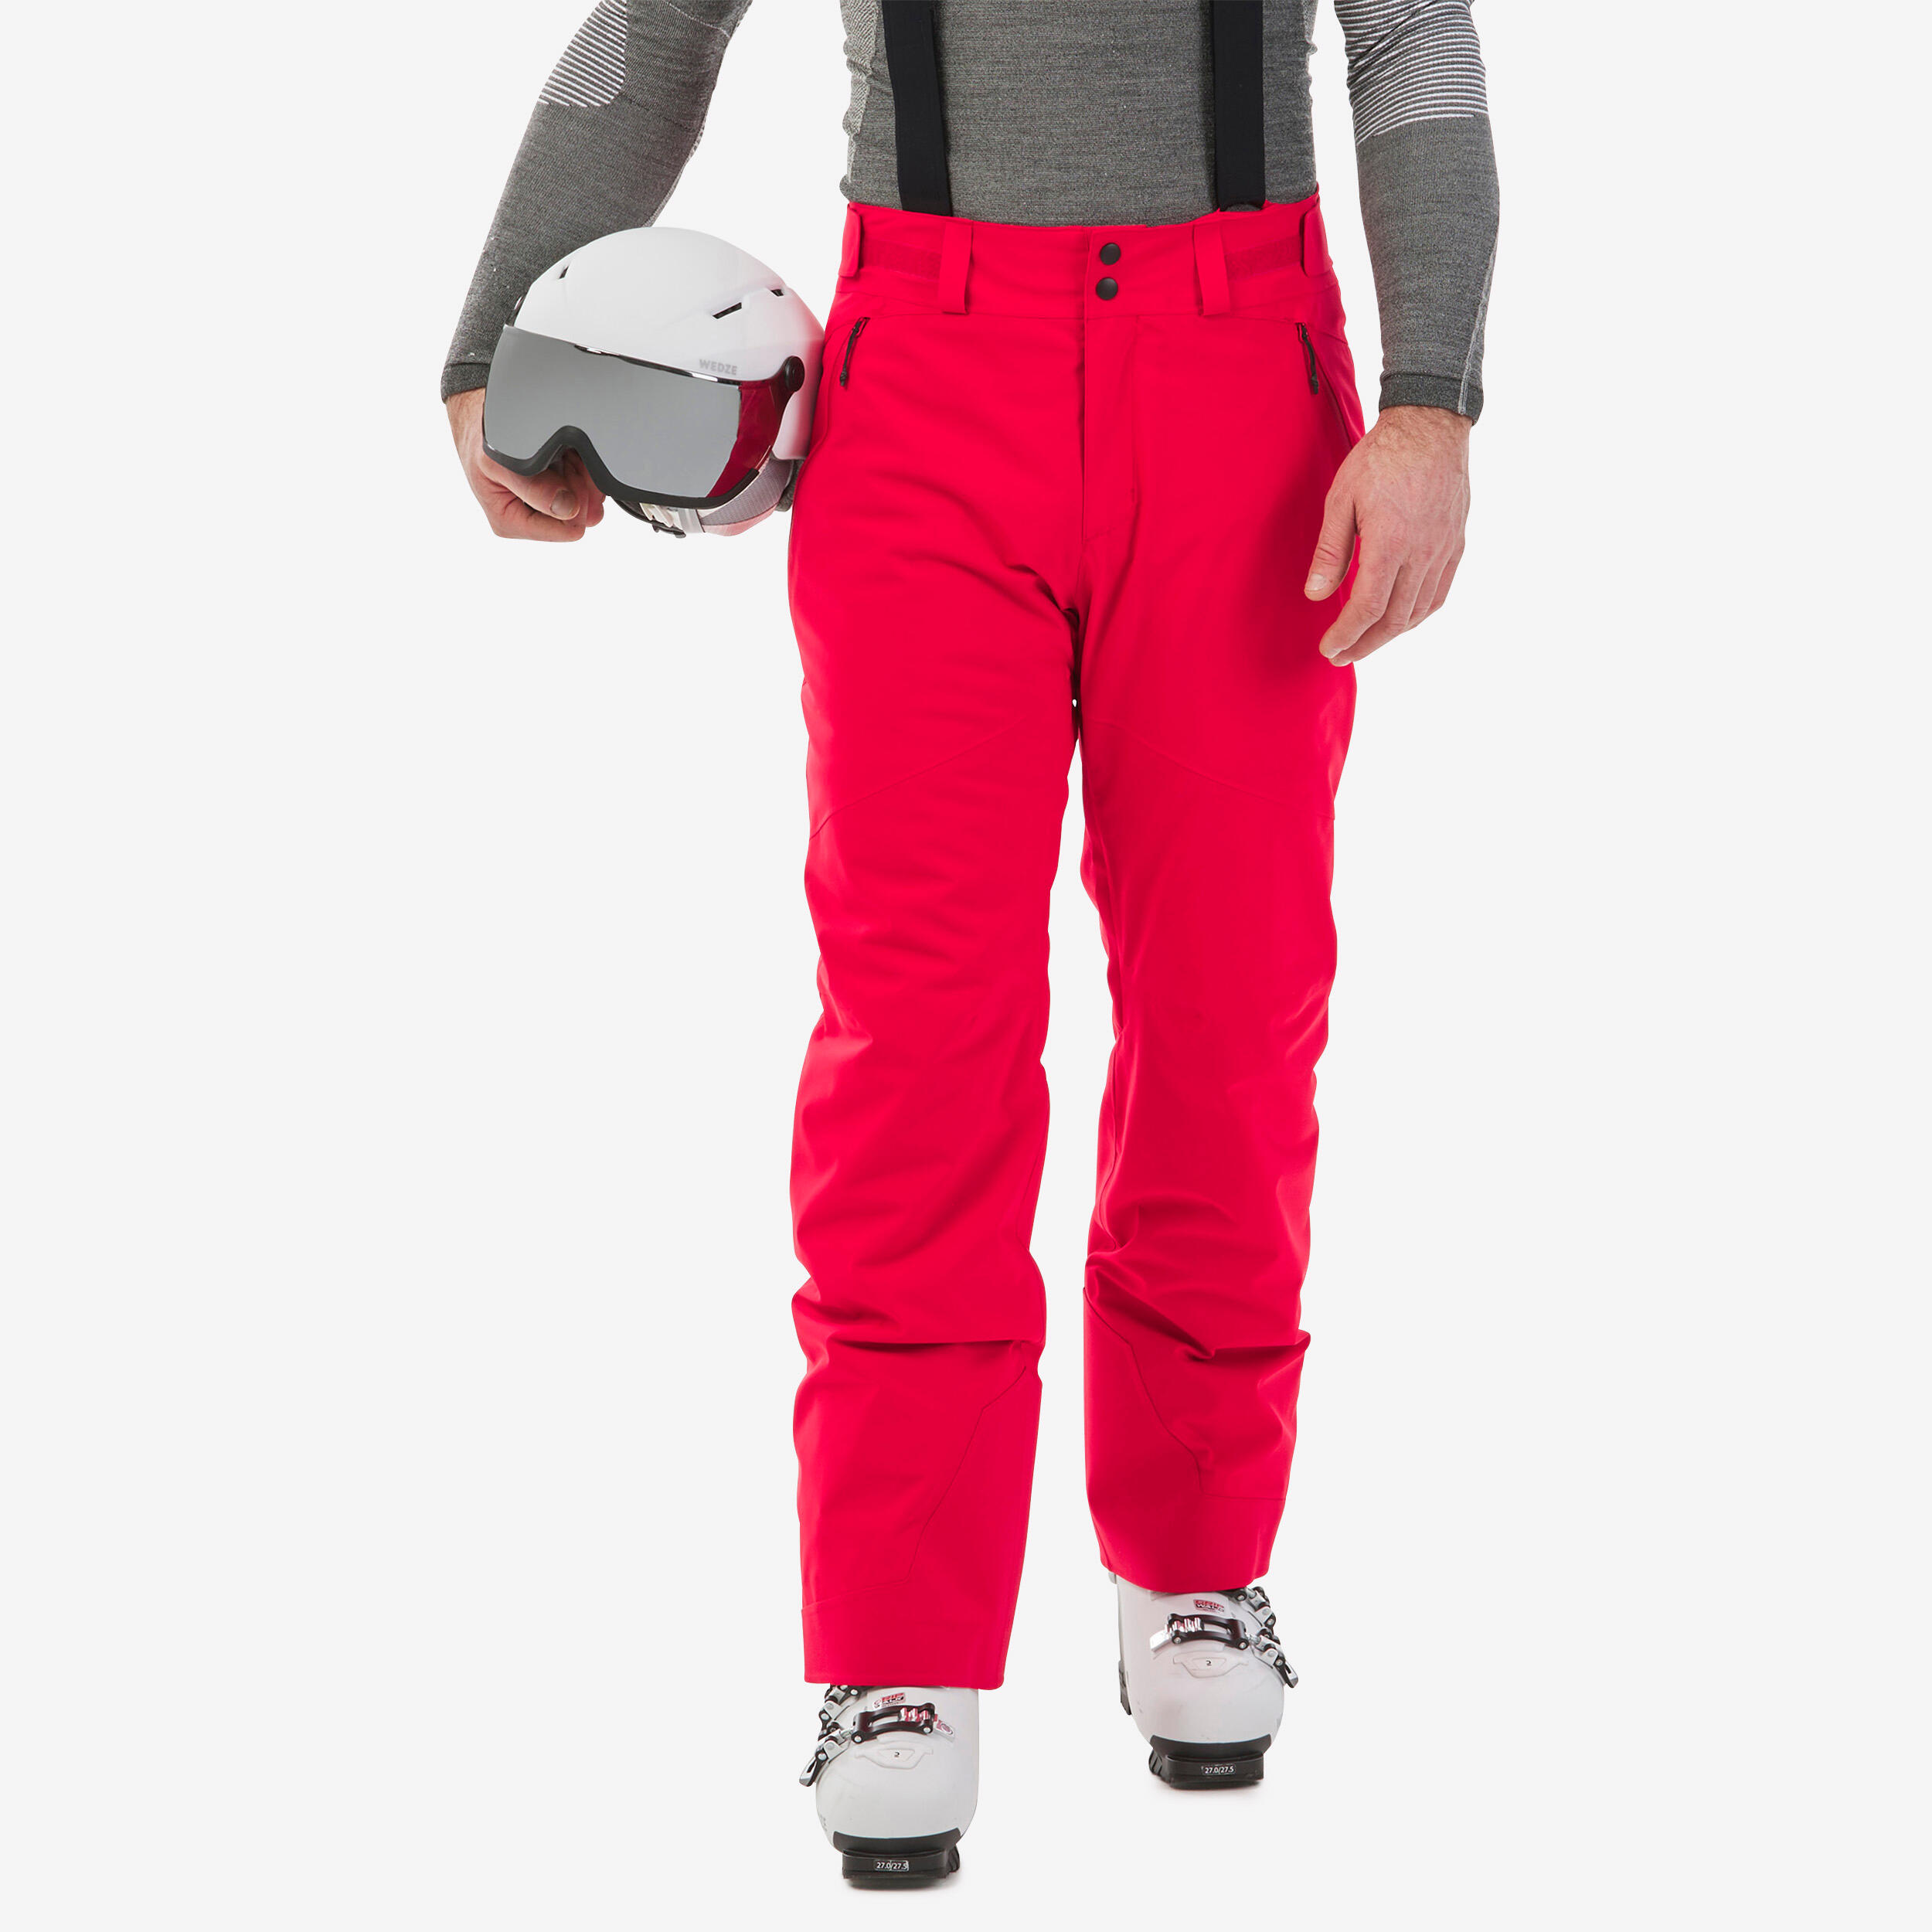 WEDZE Men's Warm Ski Trousers - 580 - Red